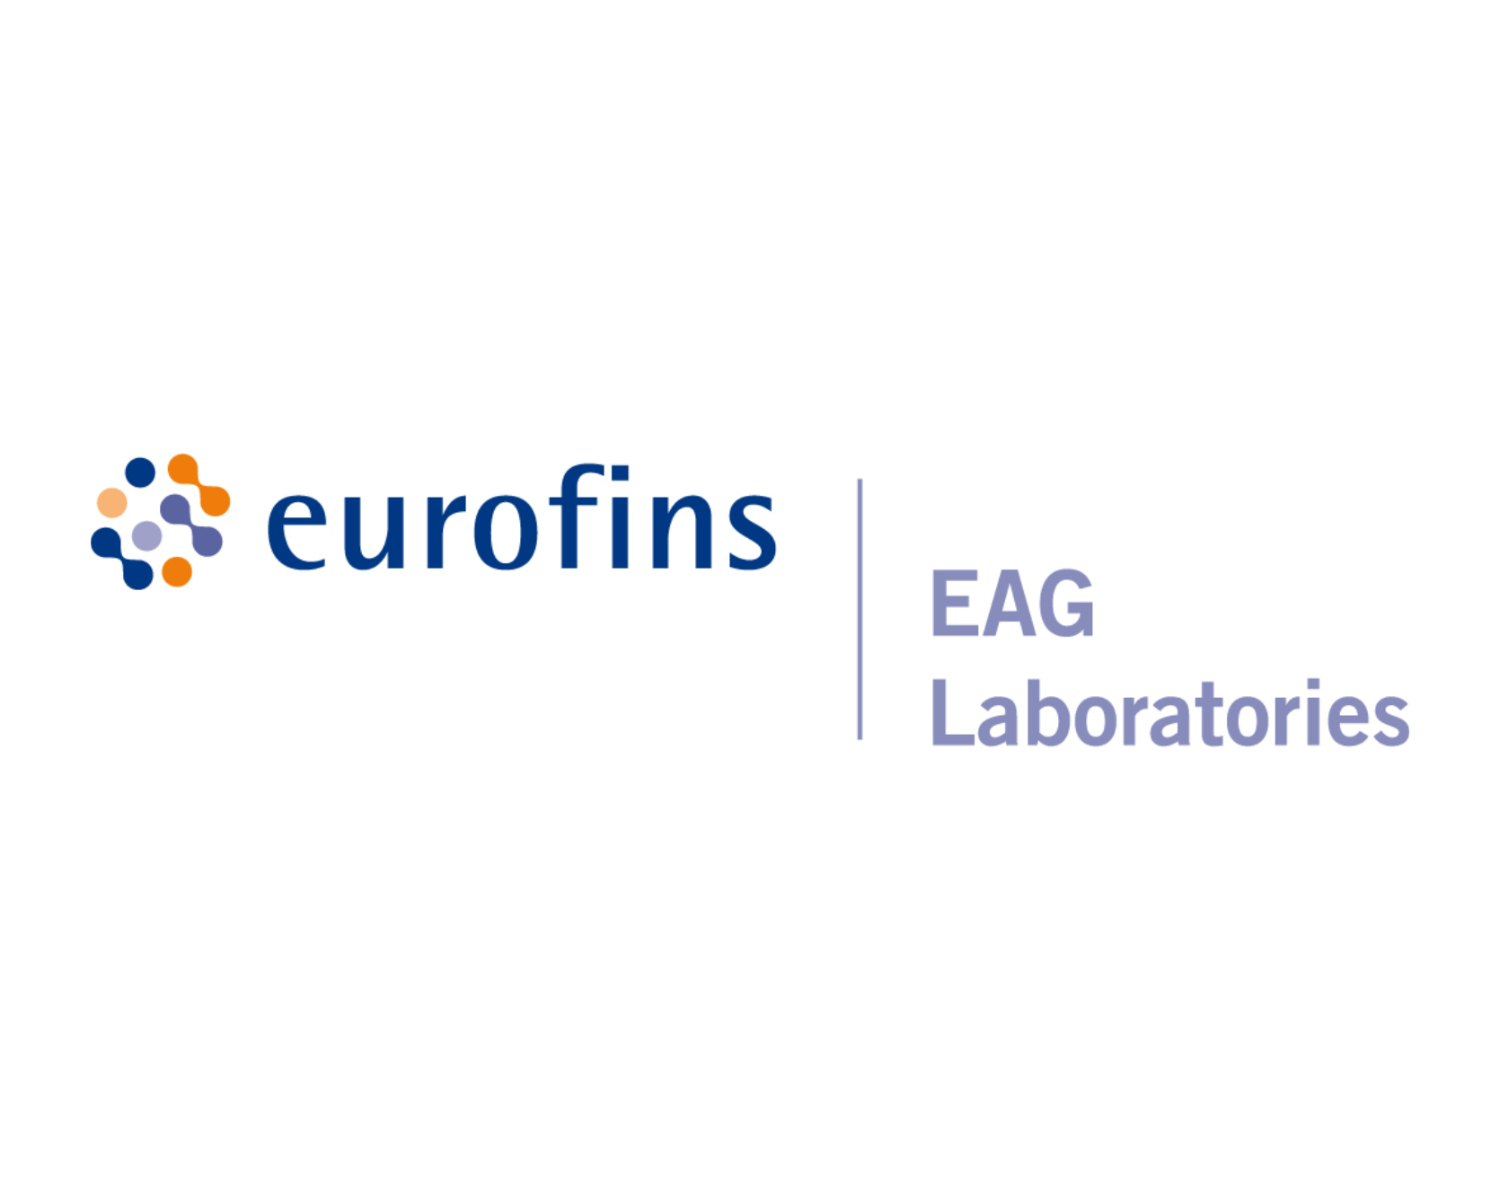 EAG Laboratories